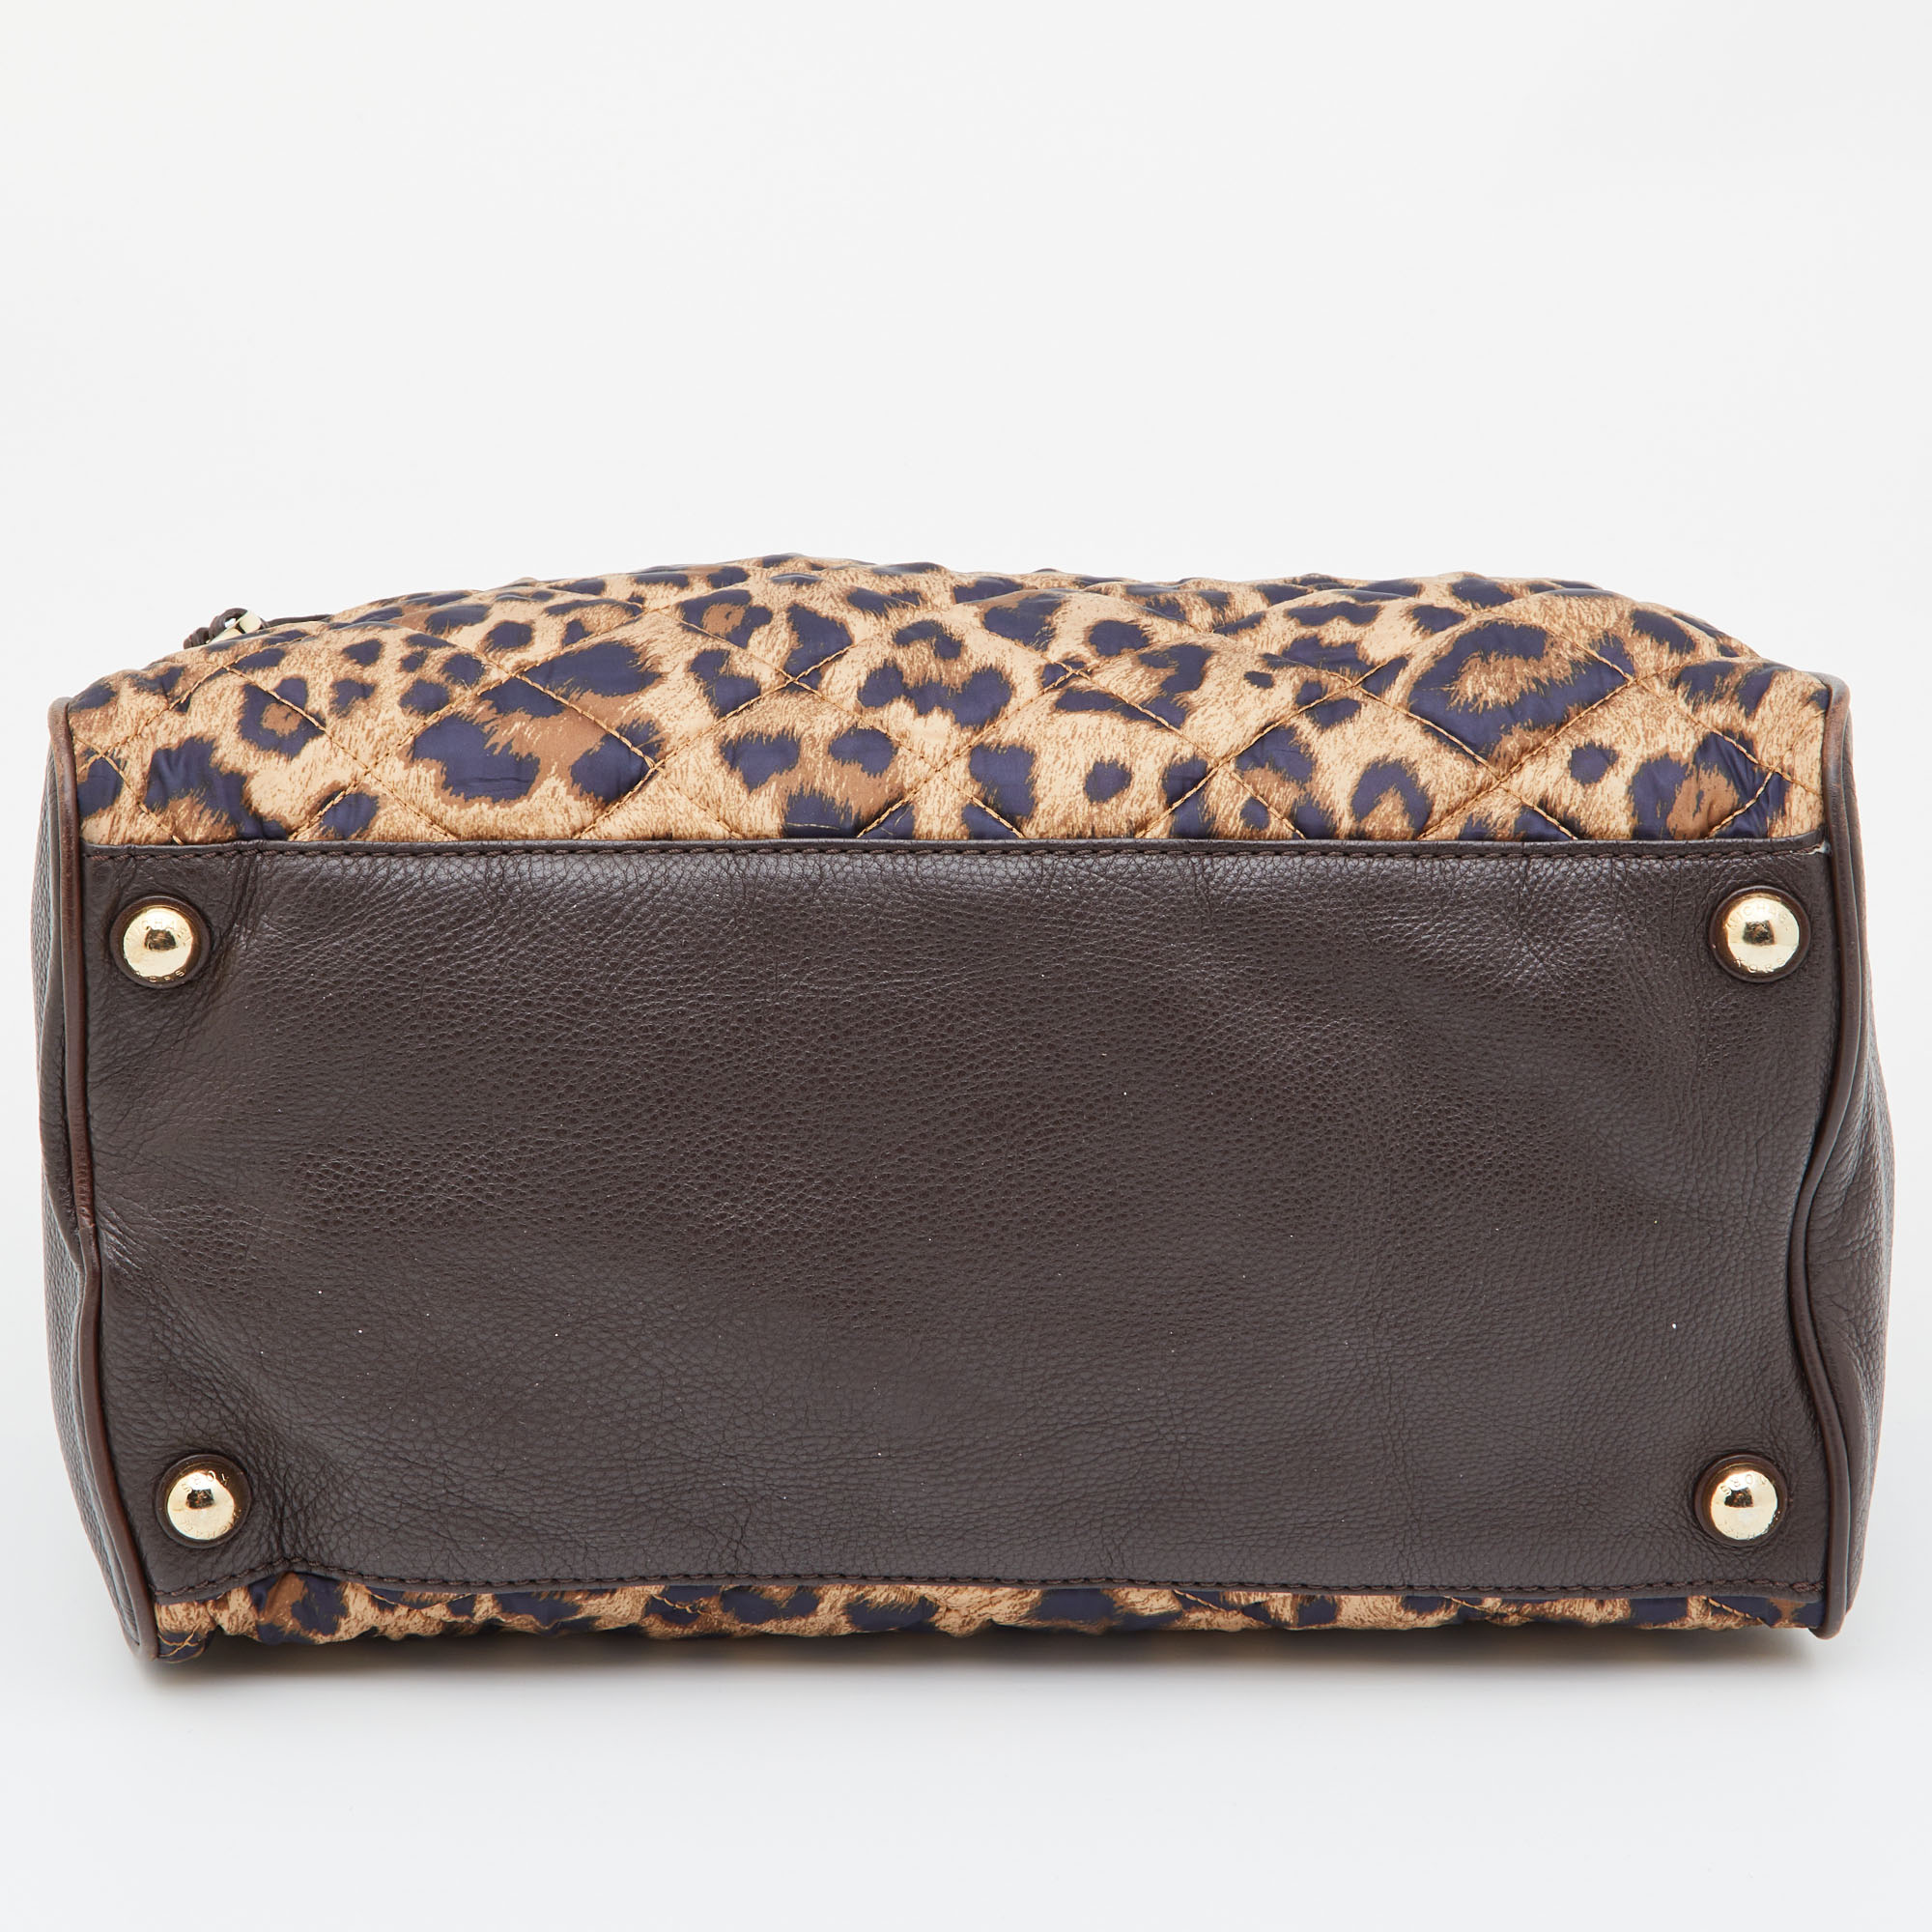 MICHAEL Michael Kors Brown Leopard Print Satin And Leather Boston Bag